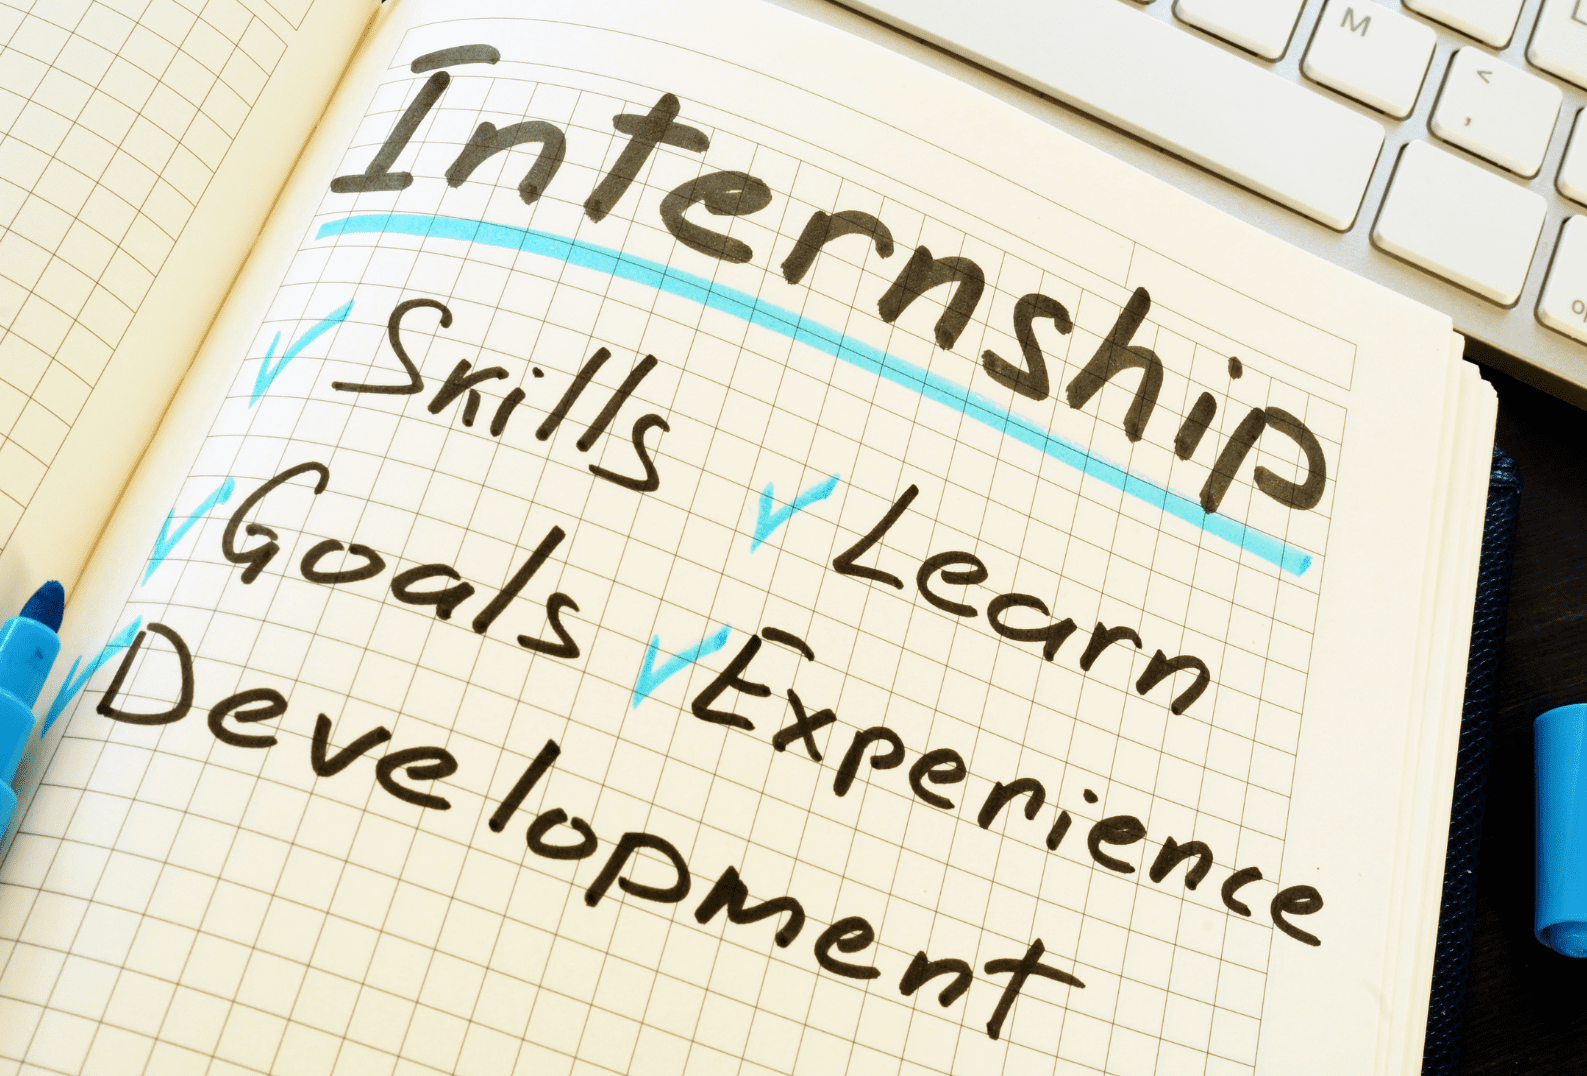 Amazing internship opportunity you should seek for